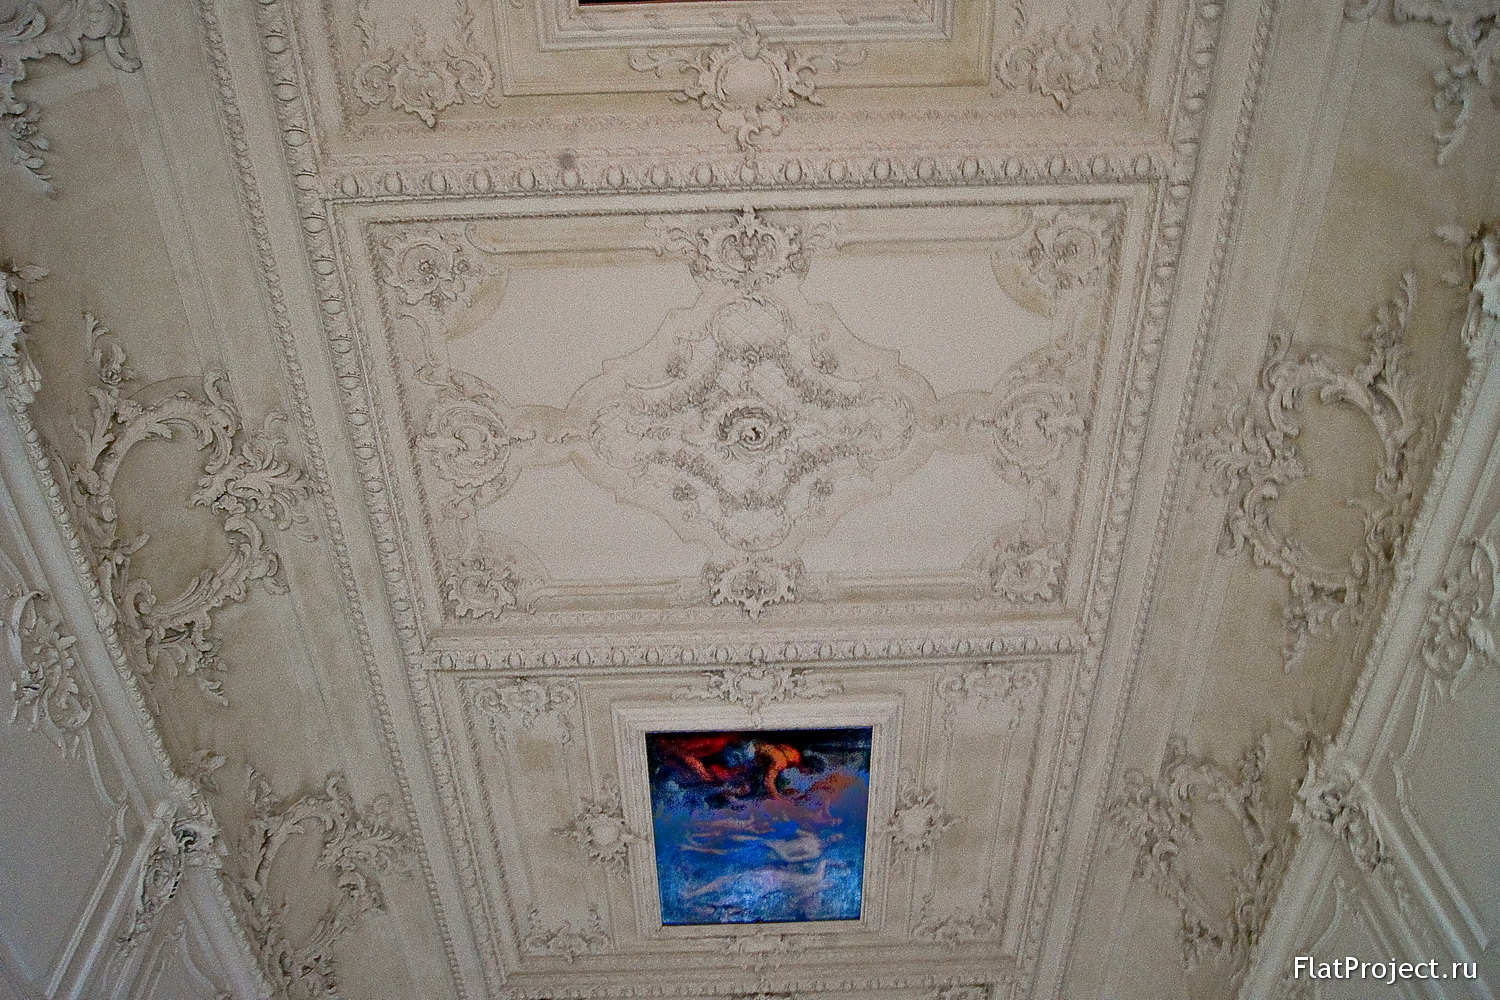 The Catherine Palace interiors – photo 13